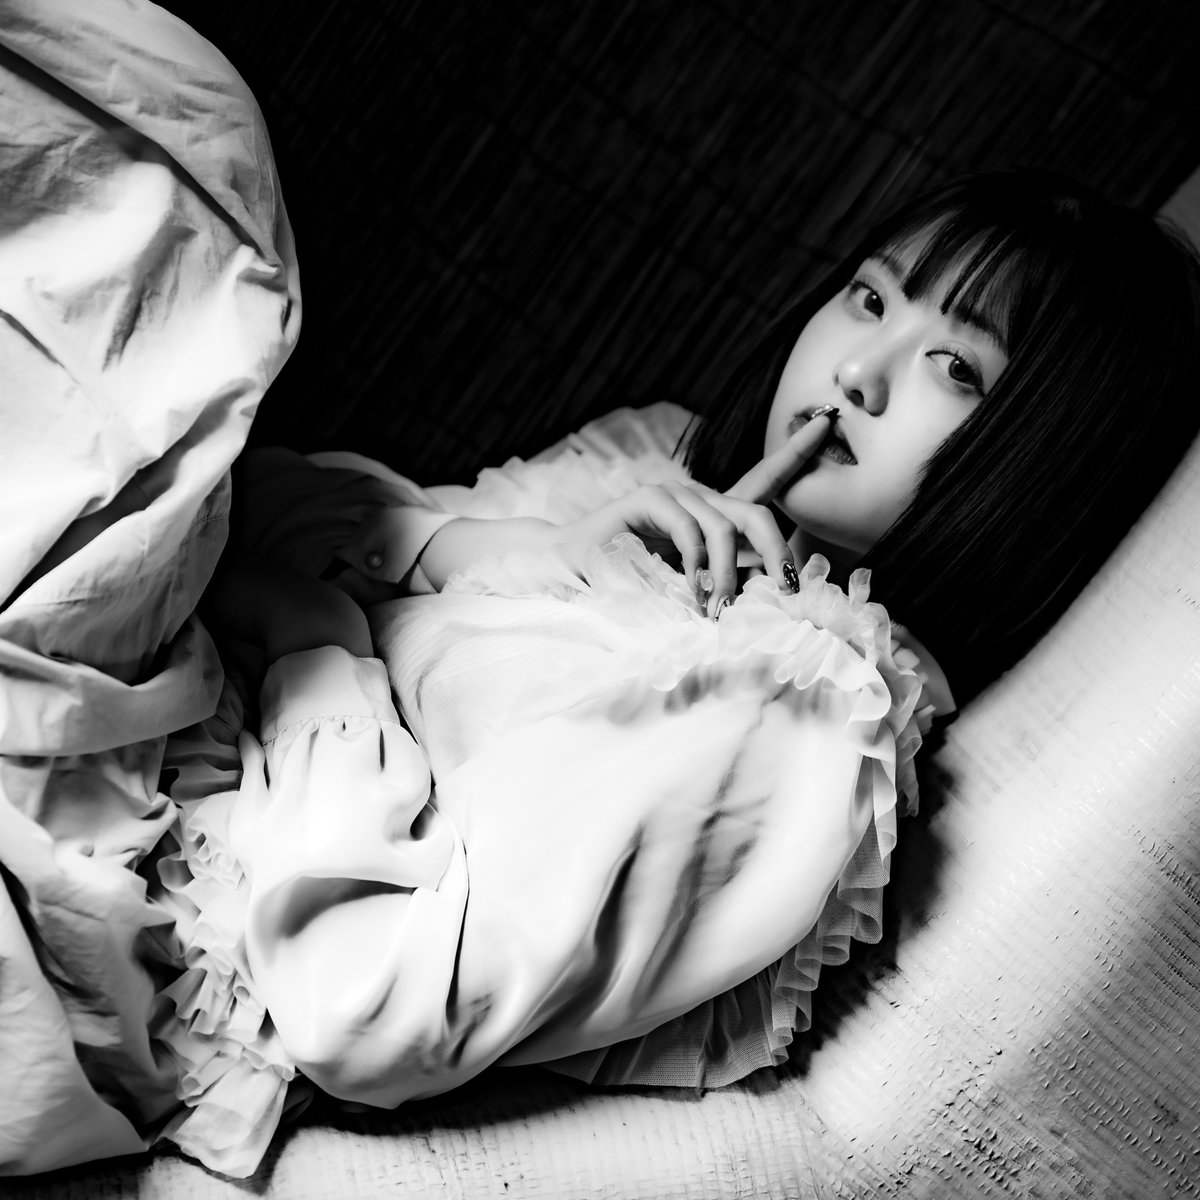 Cherish撮影会 24.03.31 門前仲町
@cherish_camera

model: Sakuraさん
@sr____ksn

#サクラブ🌸
#ポートレート #portrait #lovers_nippon_portrait
#tokyocameraclub #東京カメラ部
#ファインダー越しの私の世界